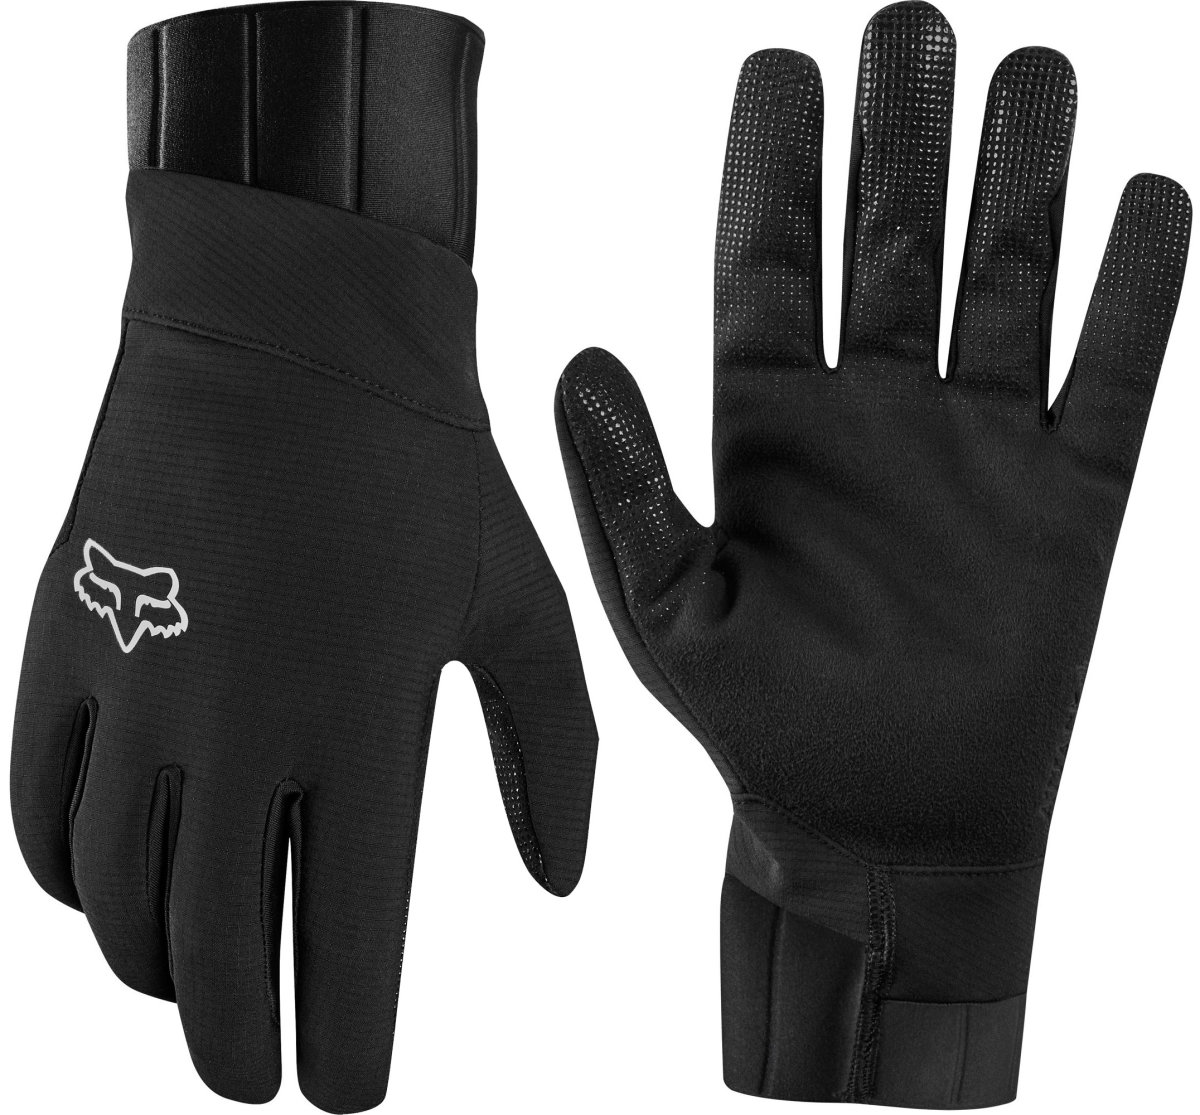 Перчатки зимние Fox Defend Pro Fire Gloves (Black) 25426-001-XL, 25426-001-L, 25426-001-S, 25426-001-M, 25426-001-2X